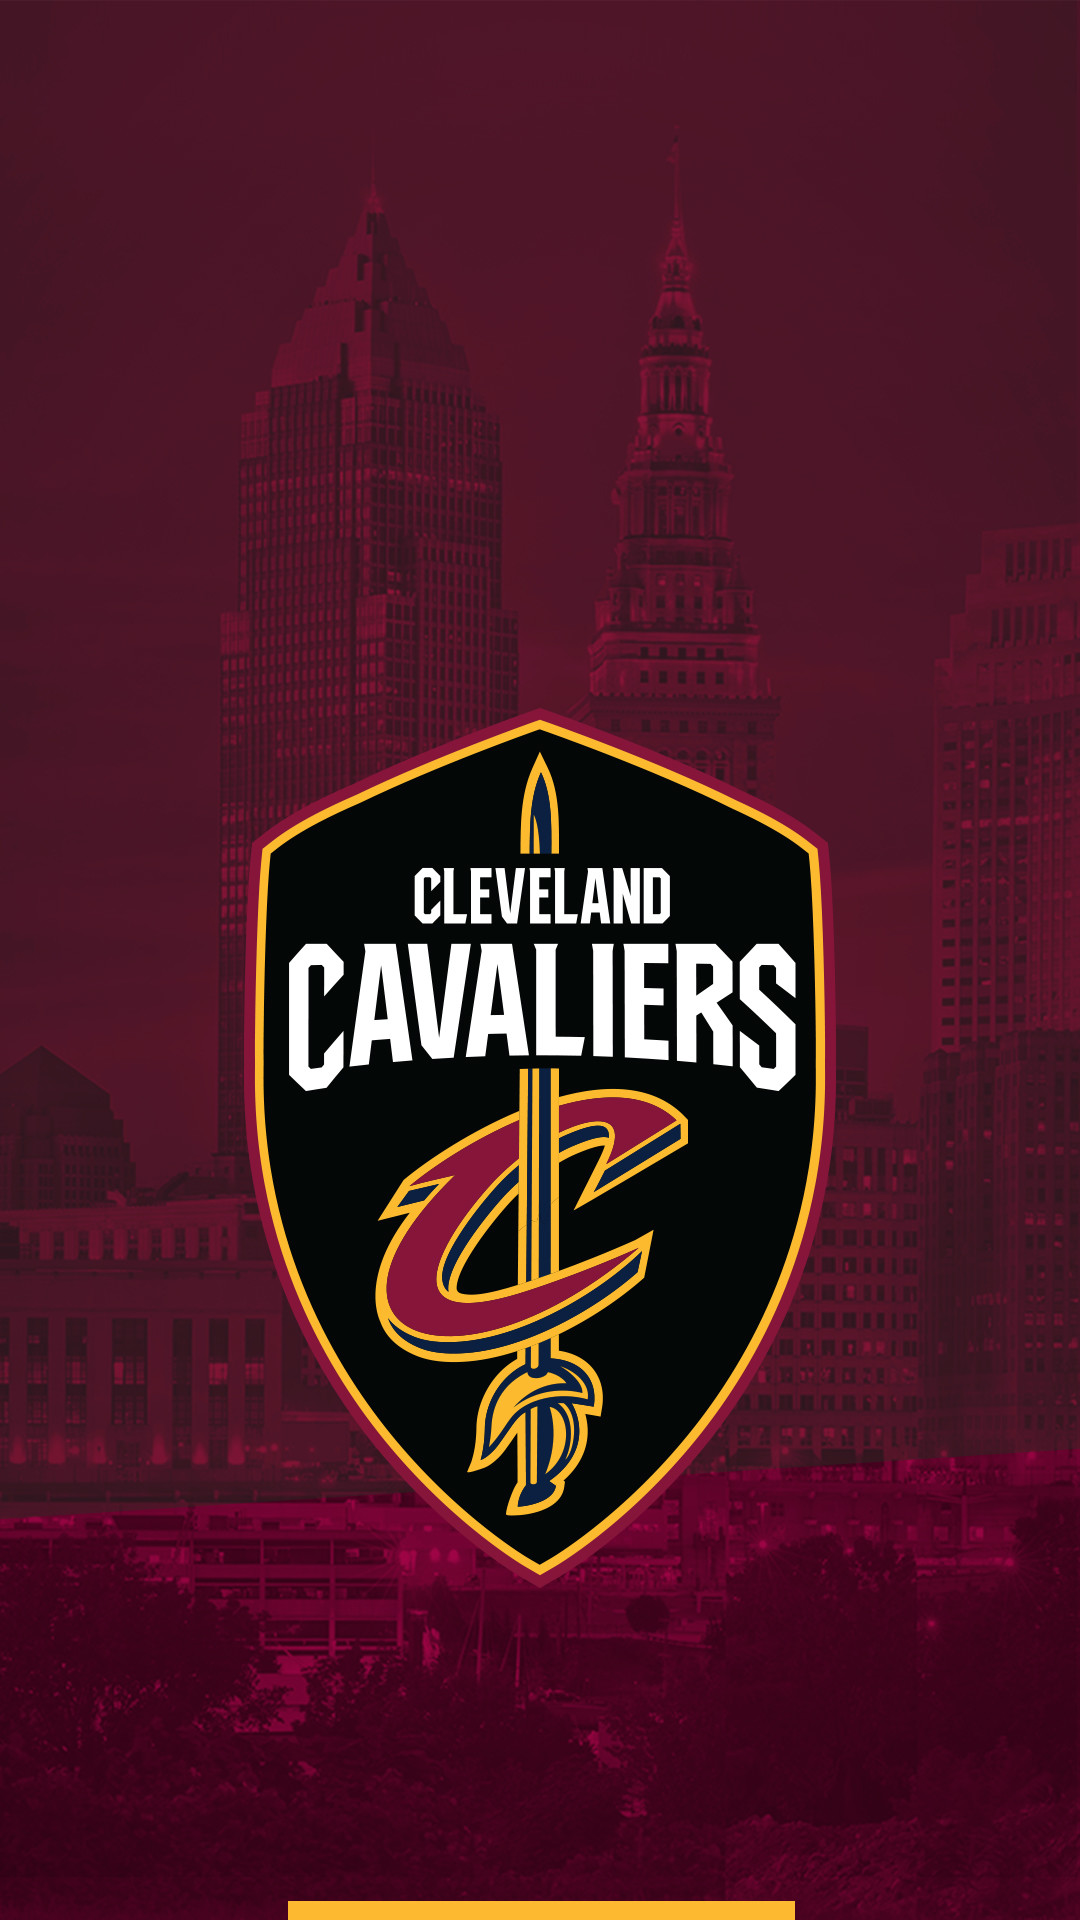 Cleveland Cavaliers Wallpapers Afalchi Free images wallpape [afalchi.blogspot.com]